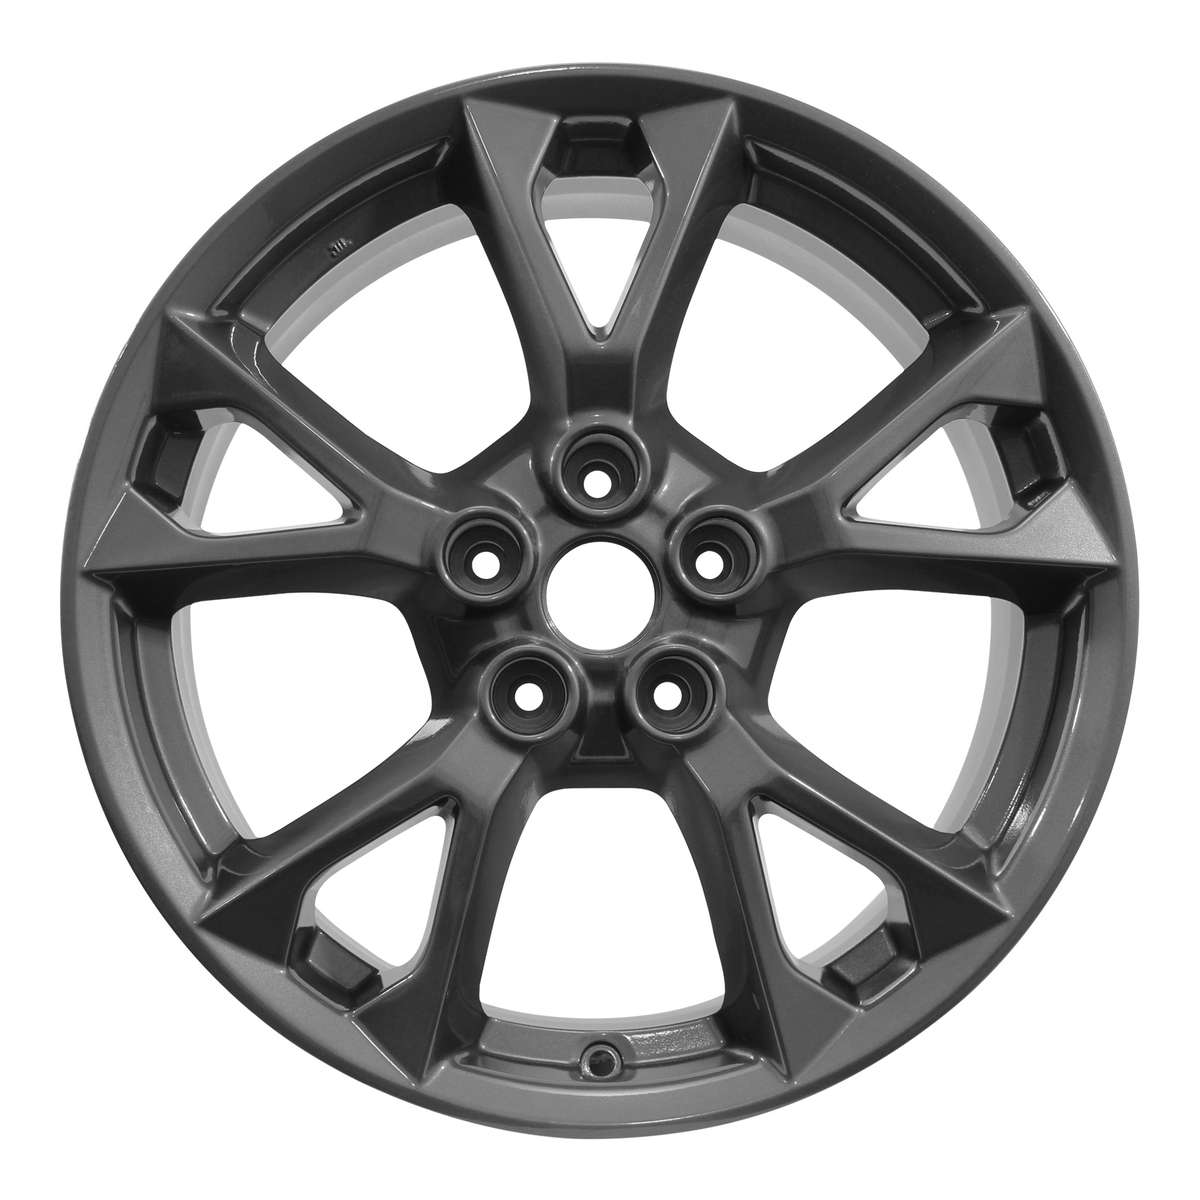 2014 Nissan Maxima 18" OEM Wheel Rim W62582C